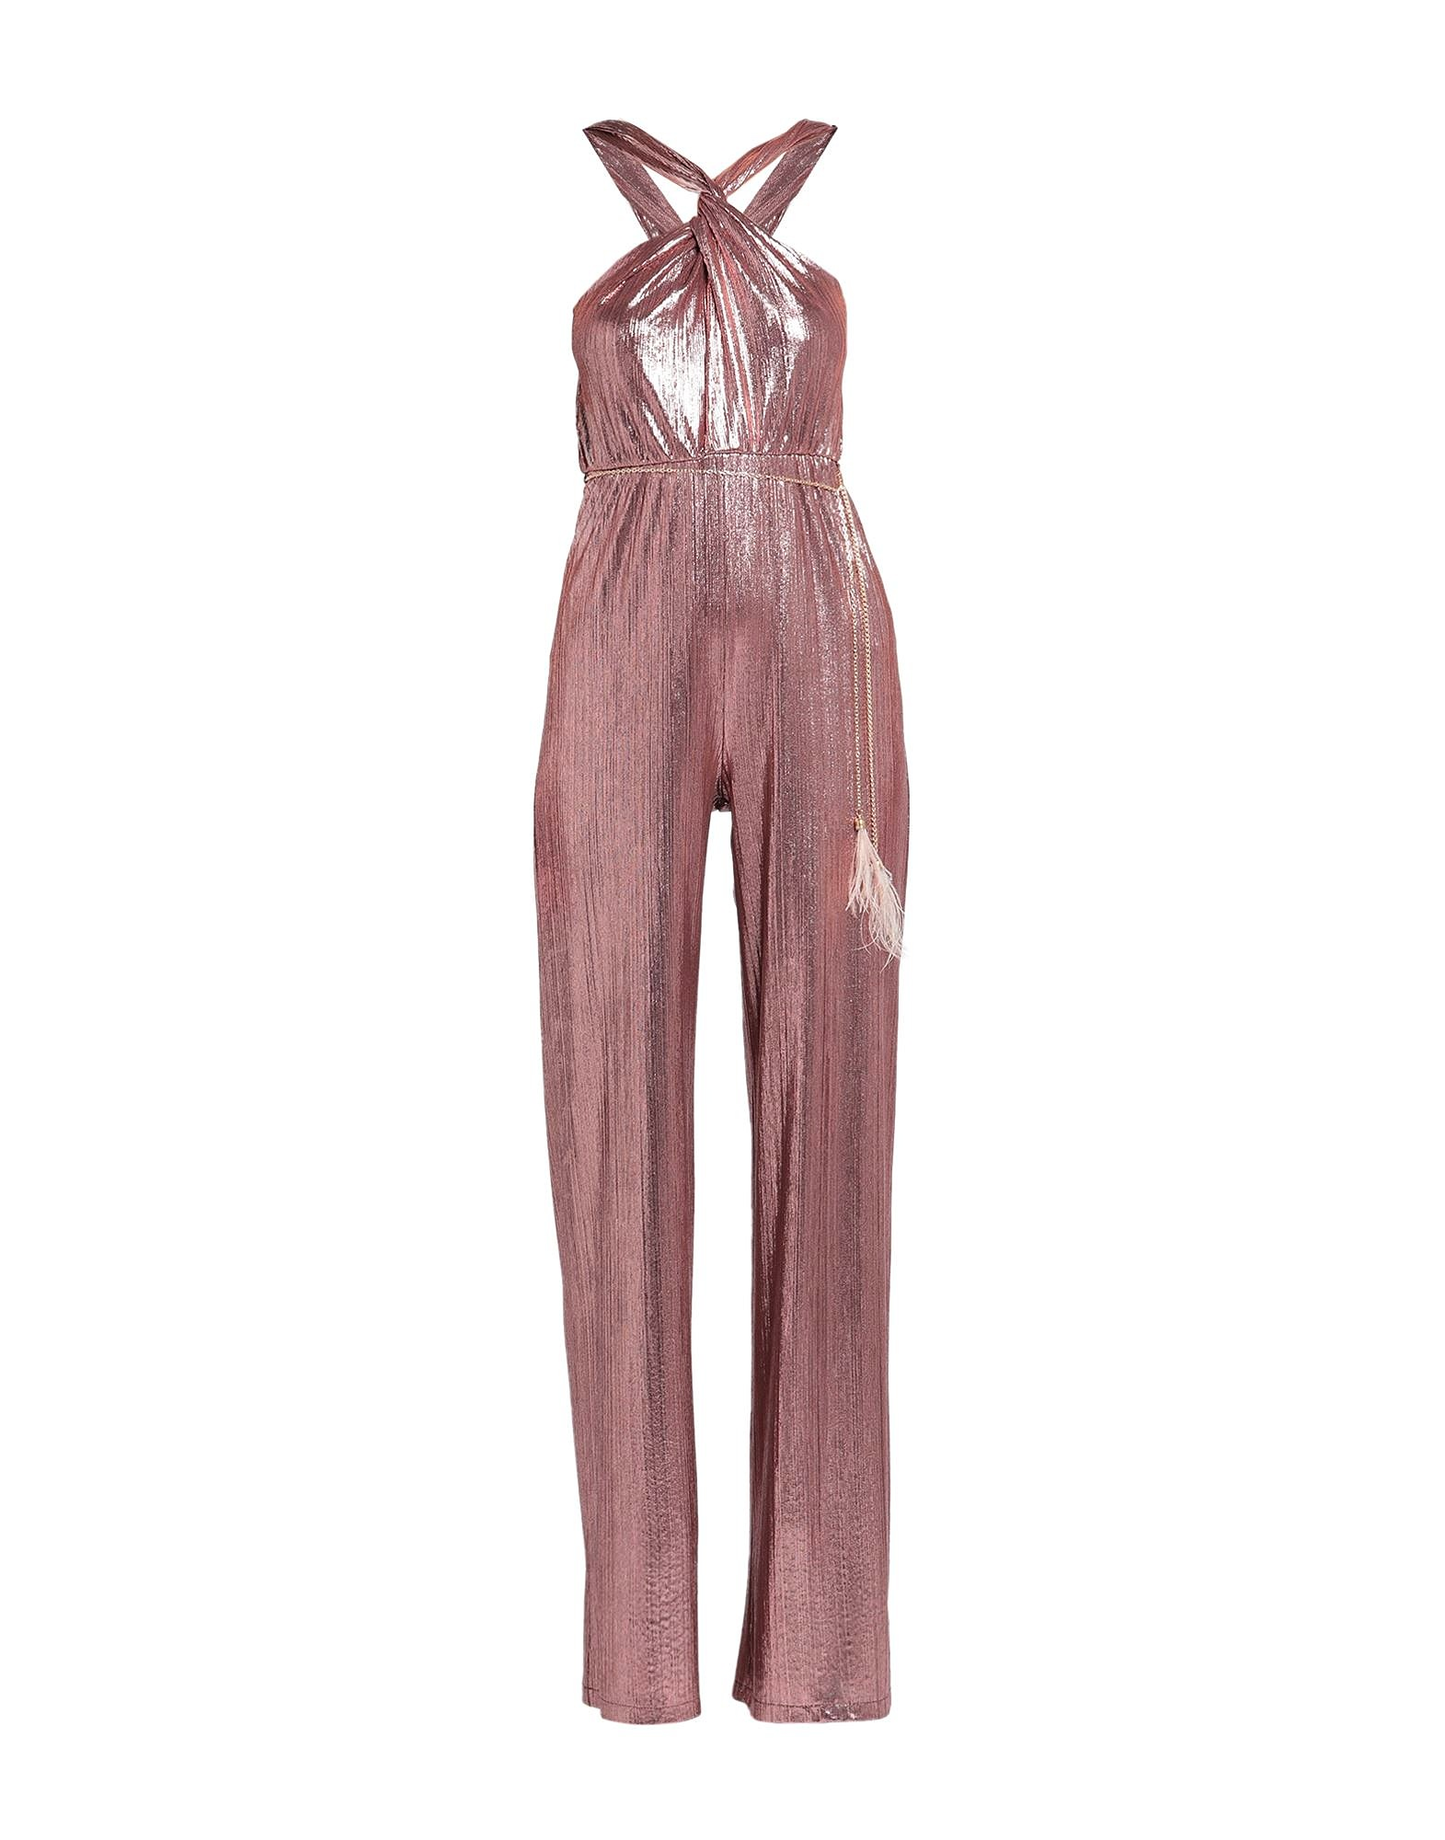 PARIOLI DRESSES  - Parioli  The Festive Metallic Jumpsuit - Pink